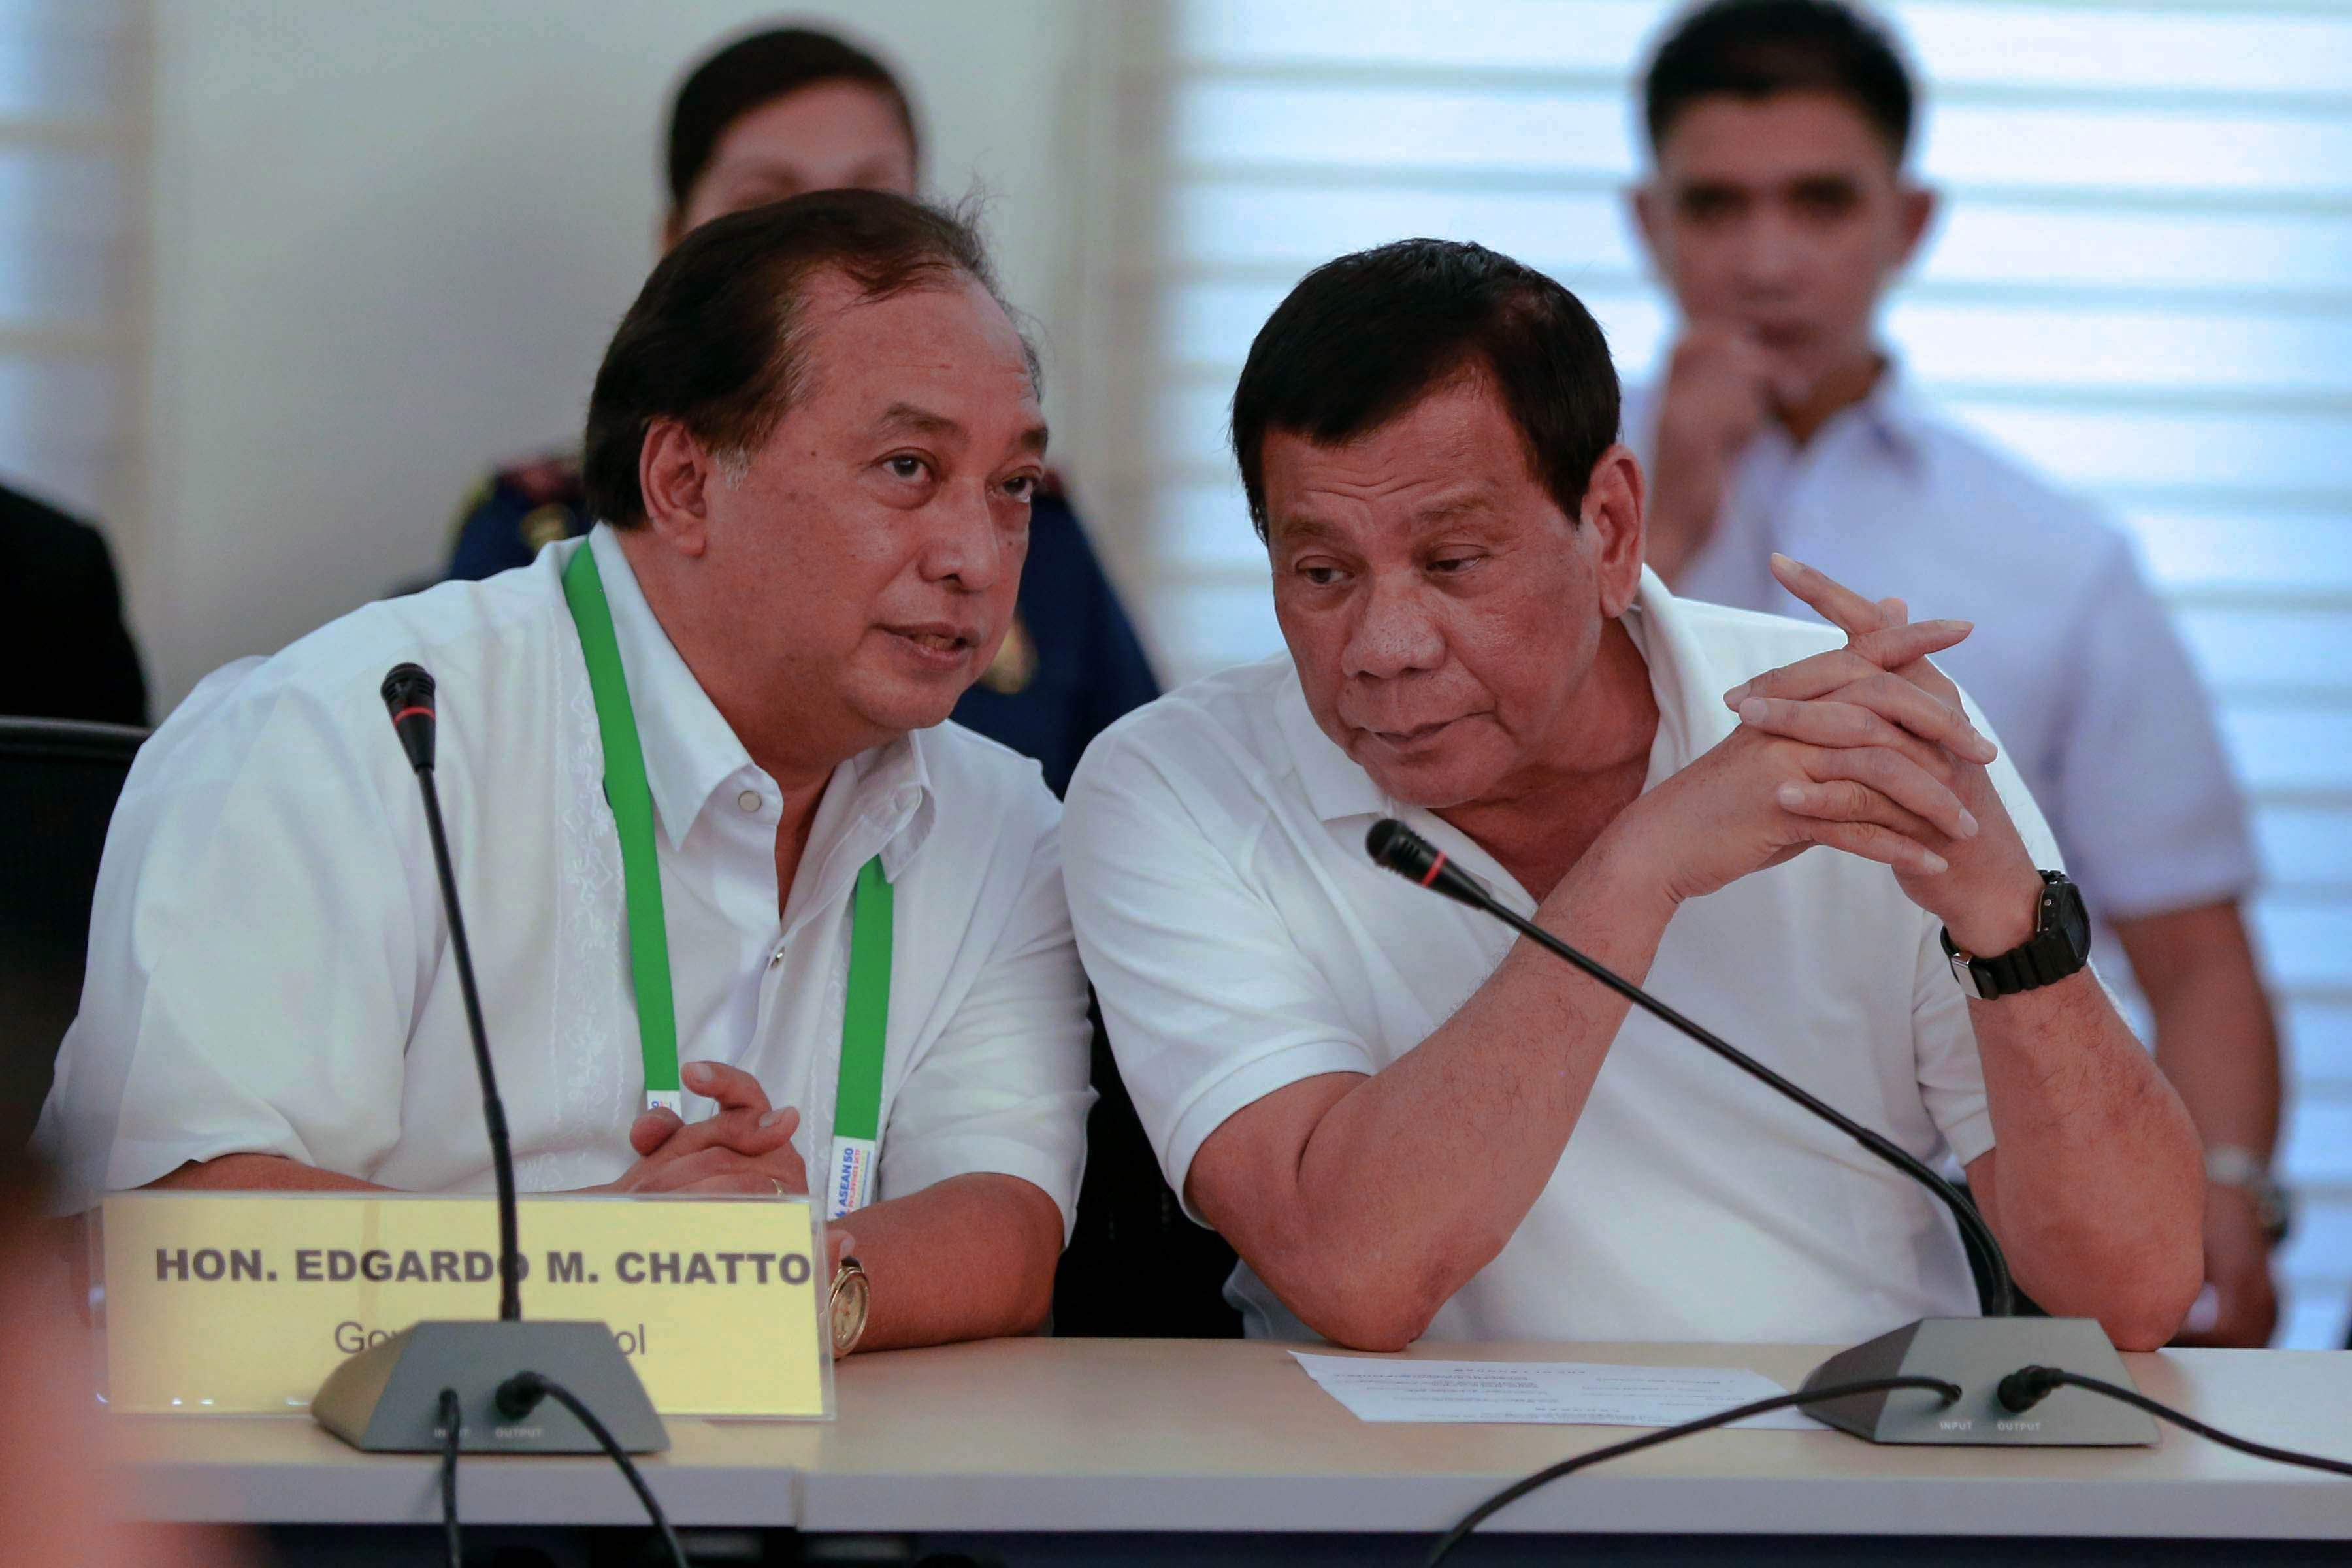 President Rodrigo Roa Duterte speaks with Bohol Governor Edgardo Chatto